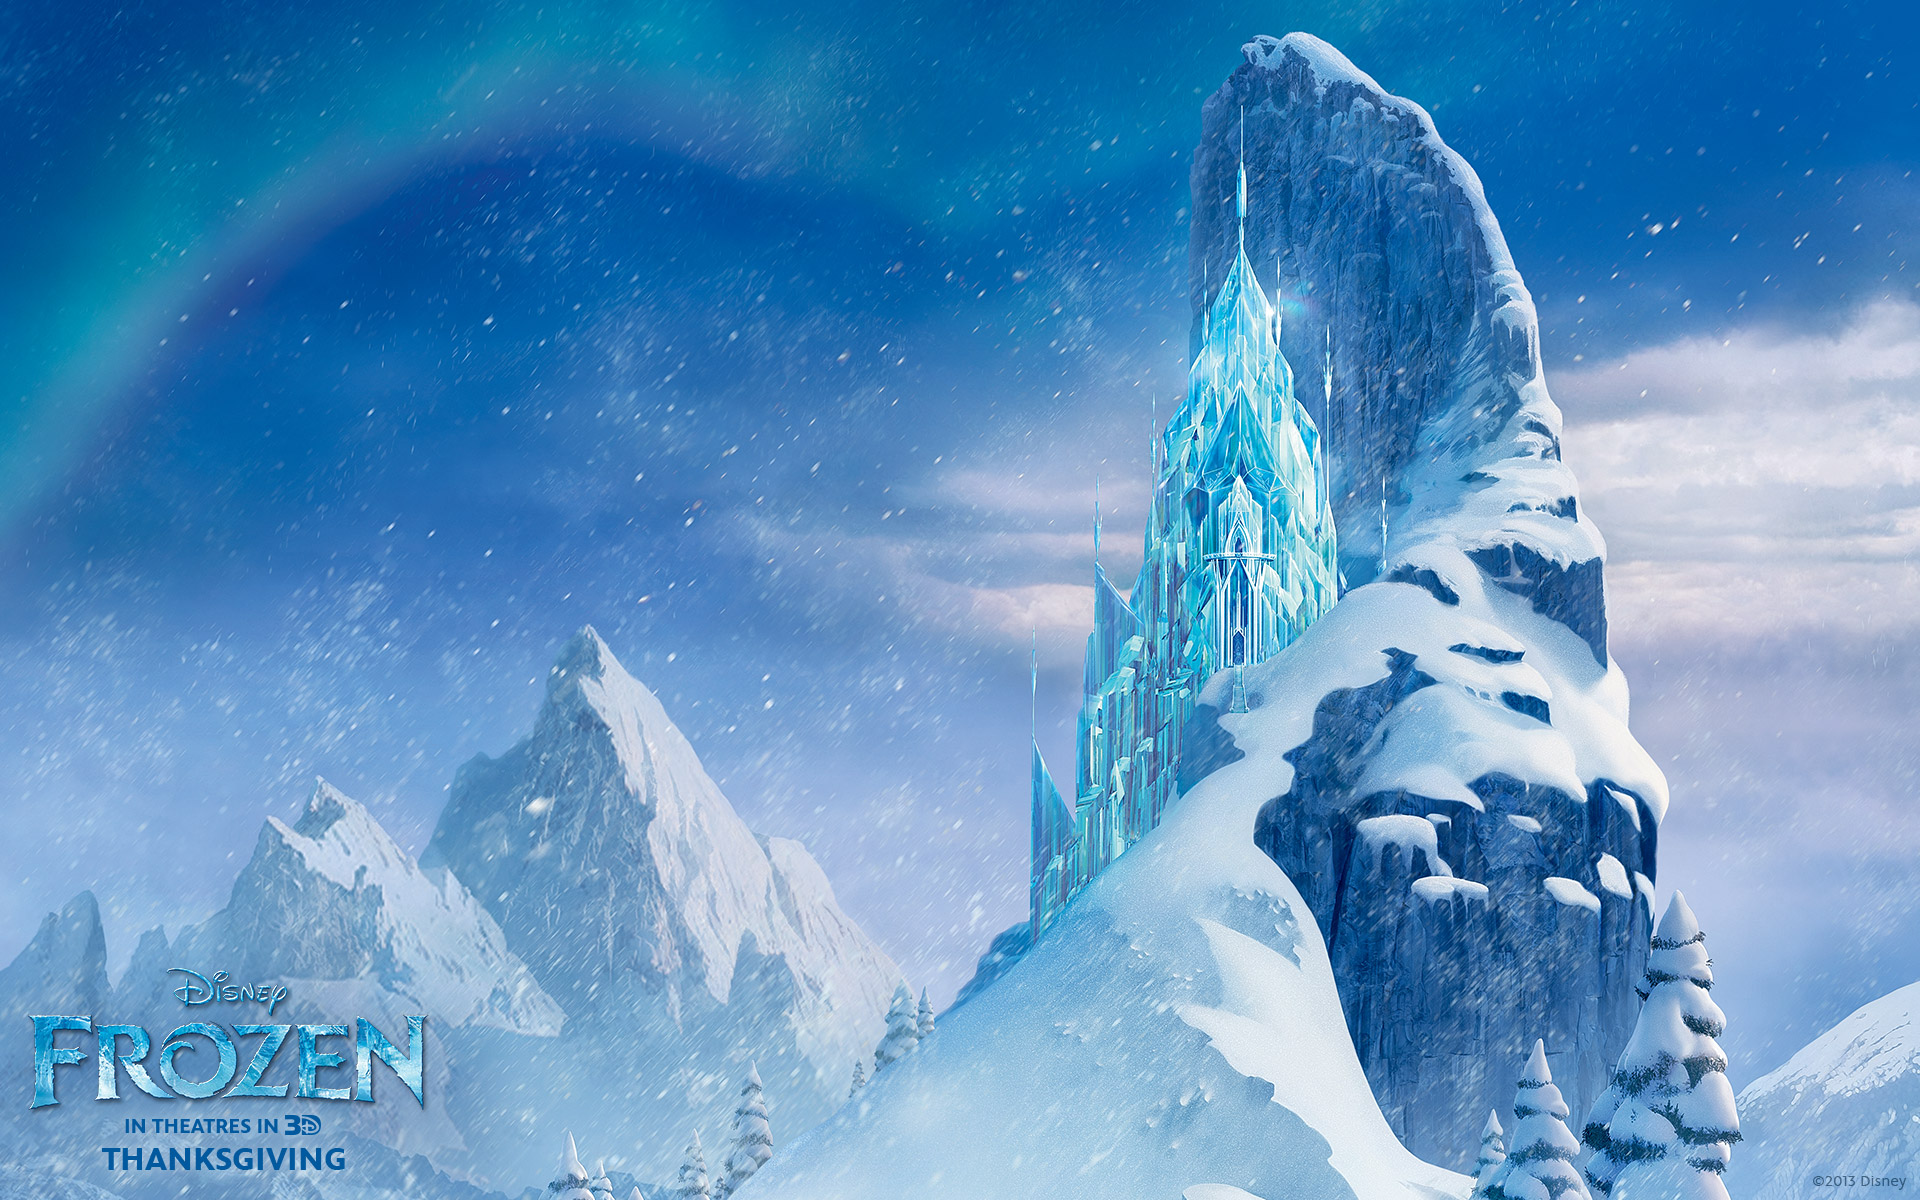  Frozen Disneys Frozen CG animated movie wallpaper image background